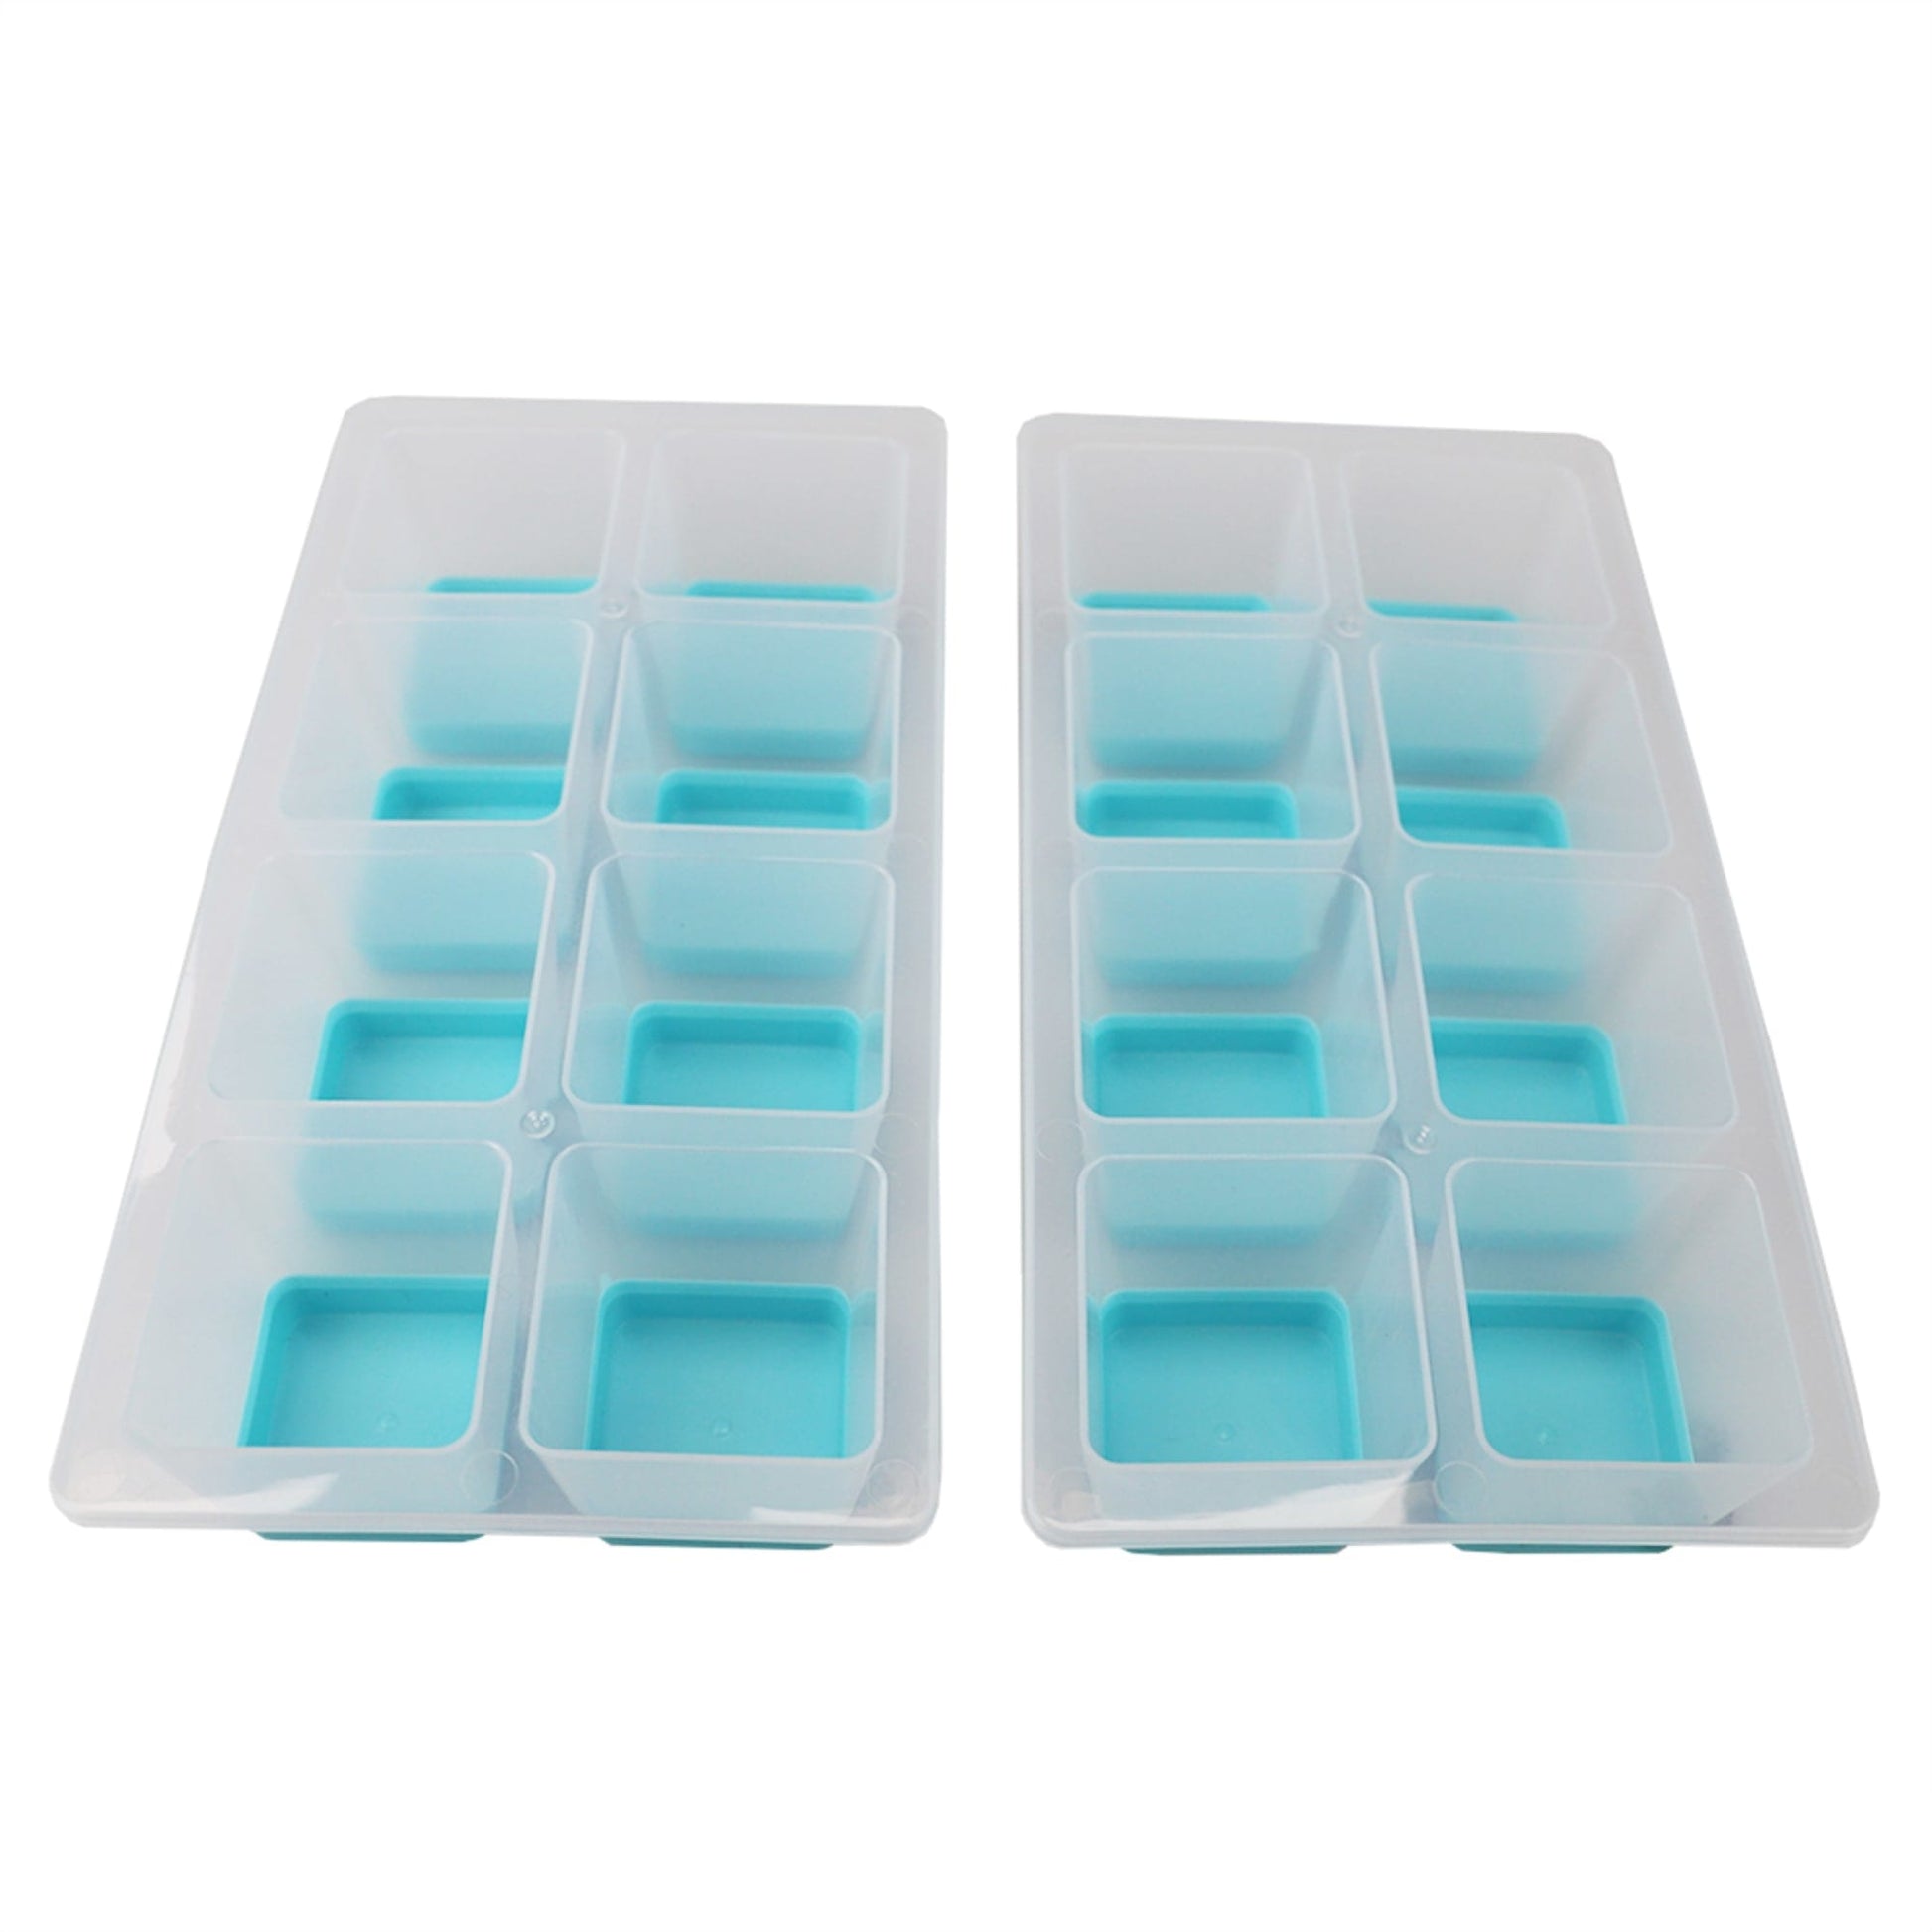 Handy Housewares 2 Jumbo Silicone Push Ice Cube Tray - Makes 8